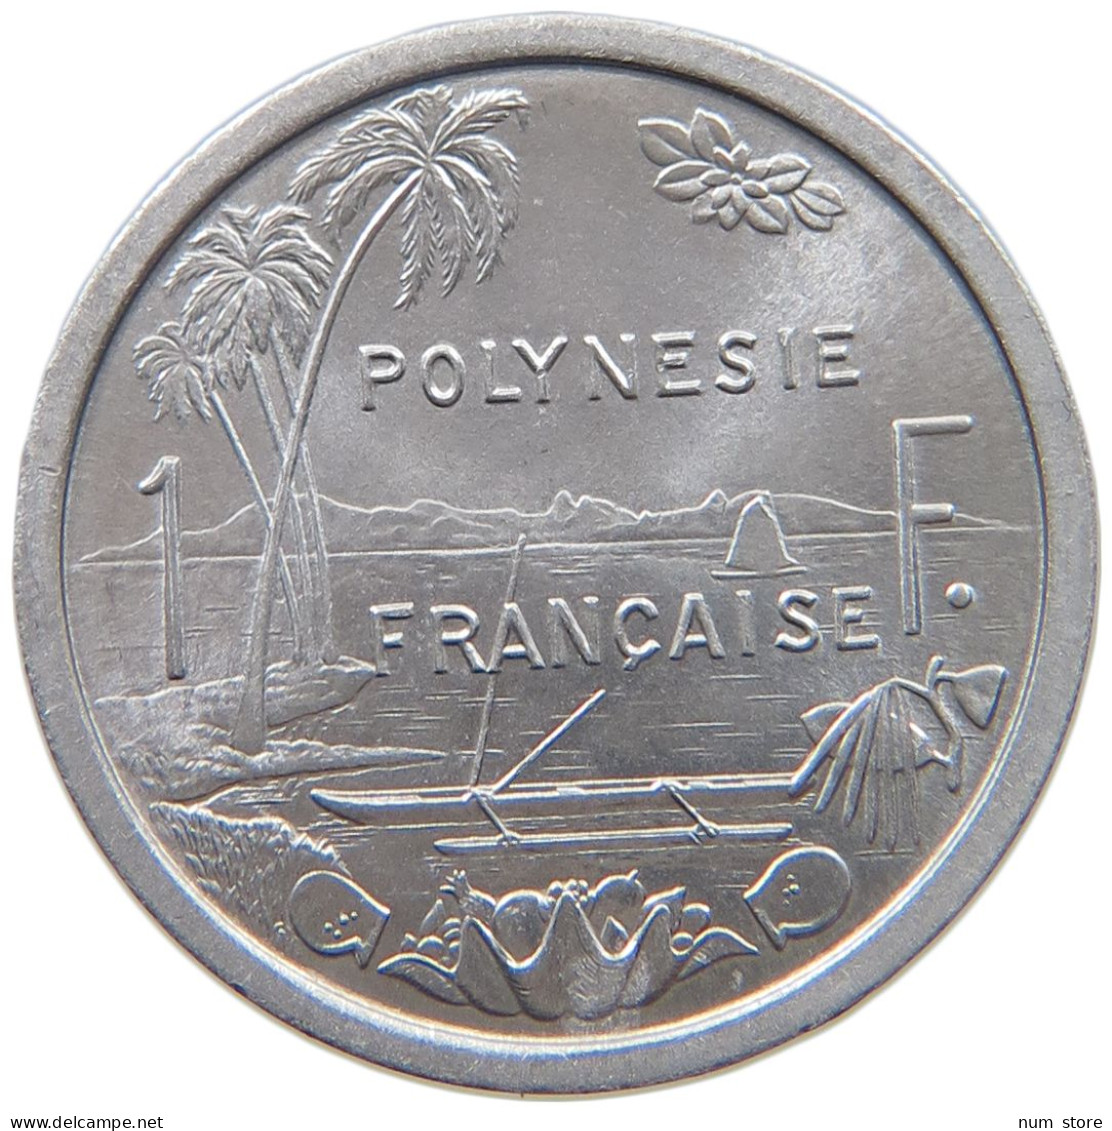 POLYNESIA FRANC 1965  #c035 0385 - Polinesia Francesa